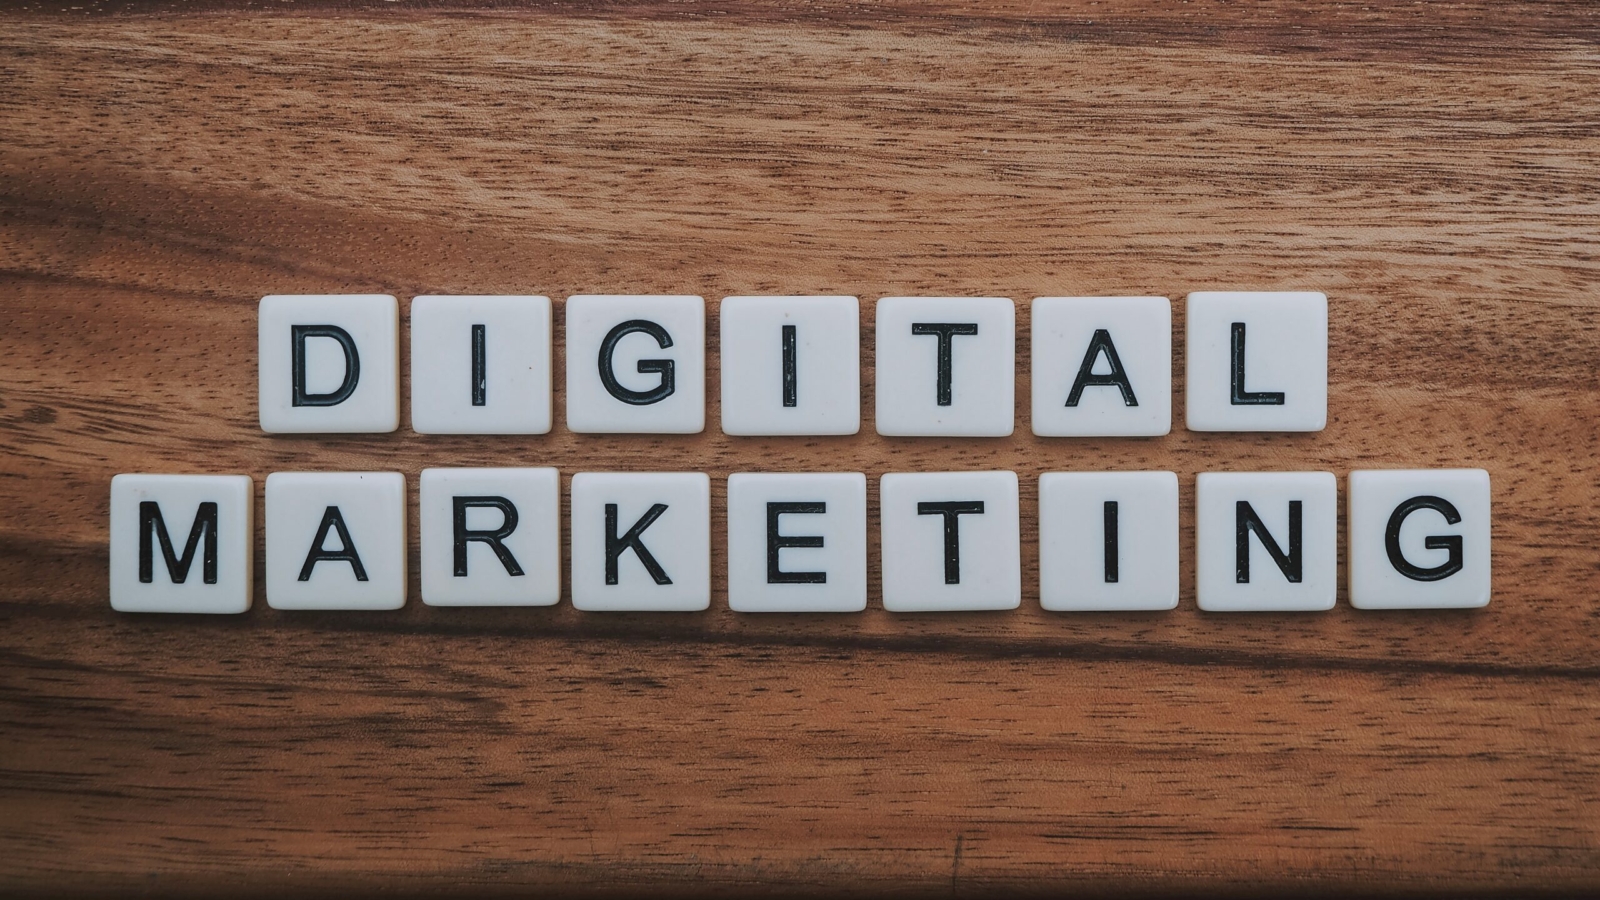 Digital Marketing Can Skyrocket Your Business